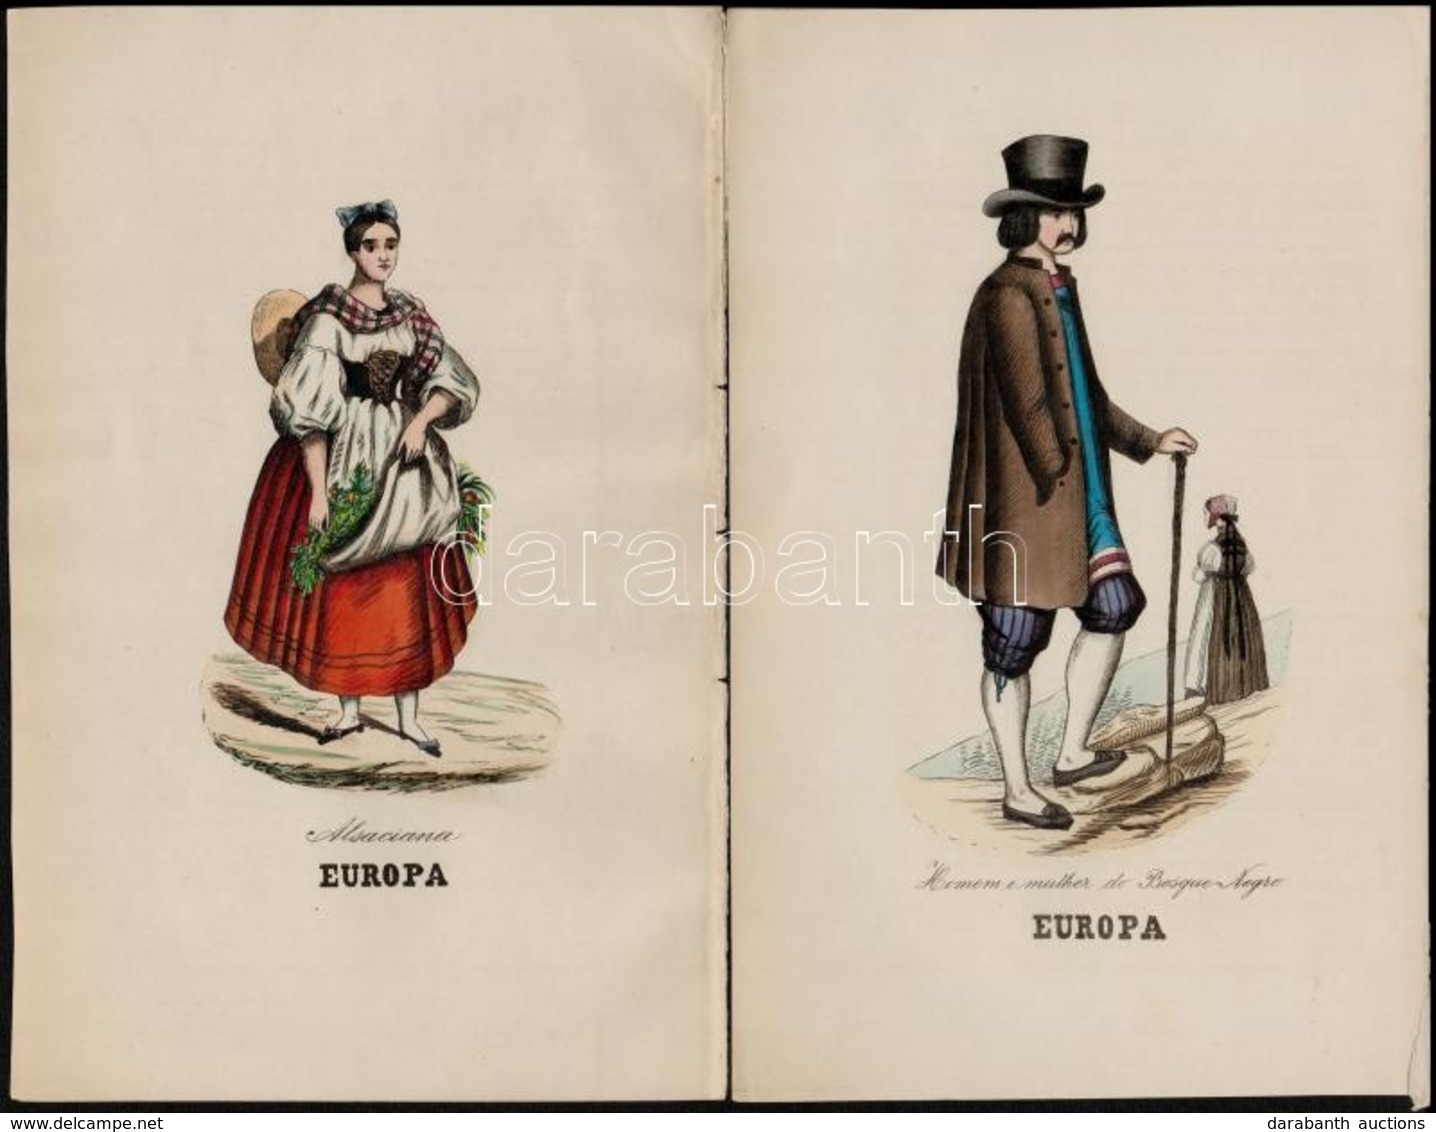 Cca 1870 Európai Népviseletek. 4 Db Litográfia  / European Folkwear. 4 Lithographies 15x24 Cm - Prenten & Gravure